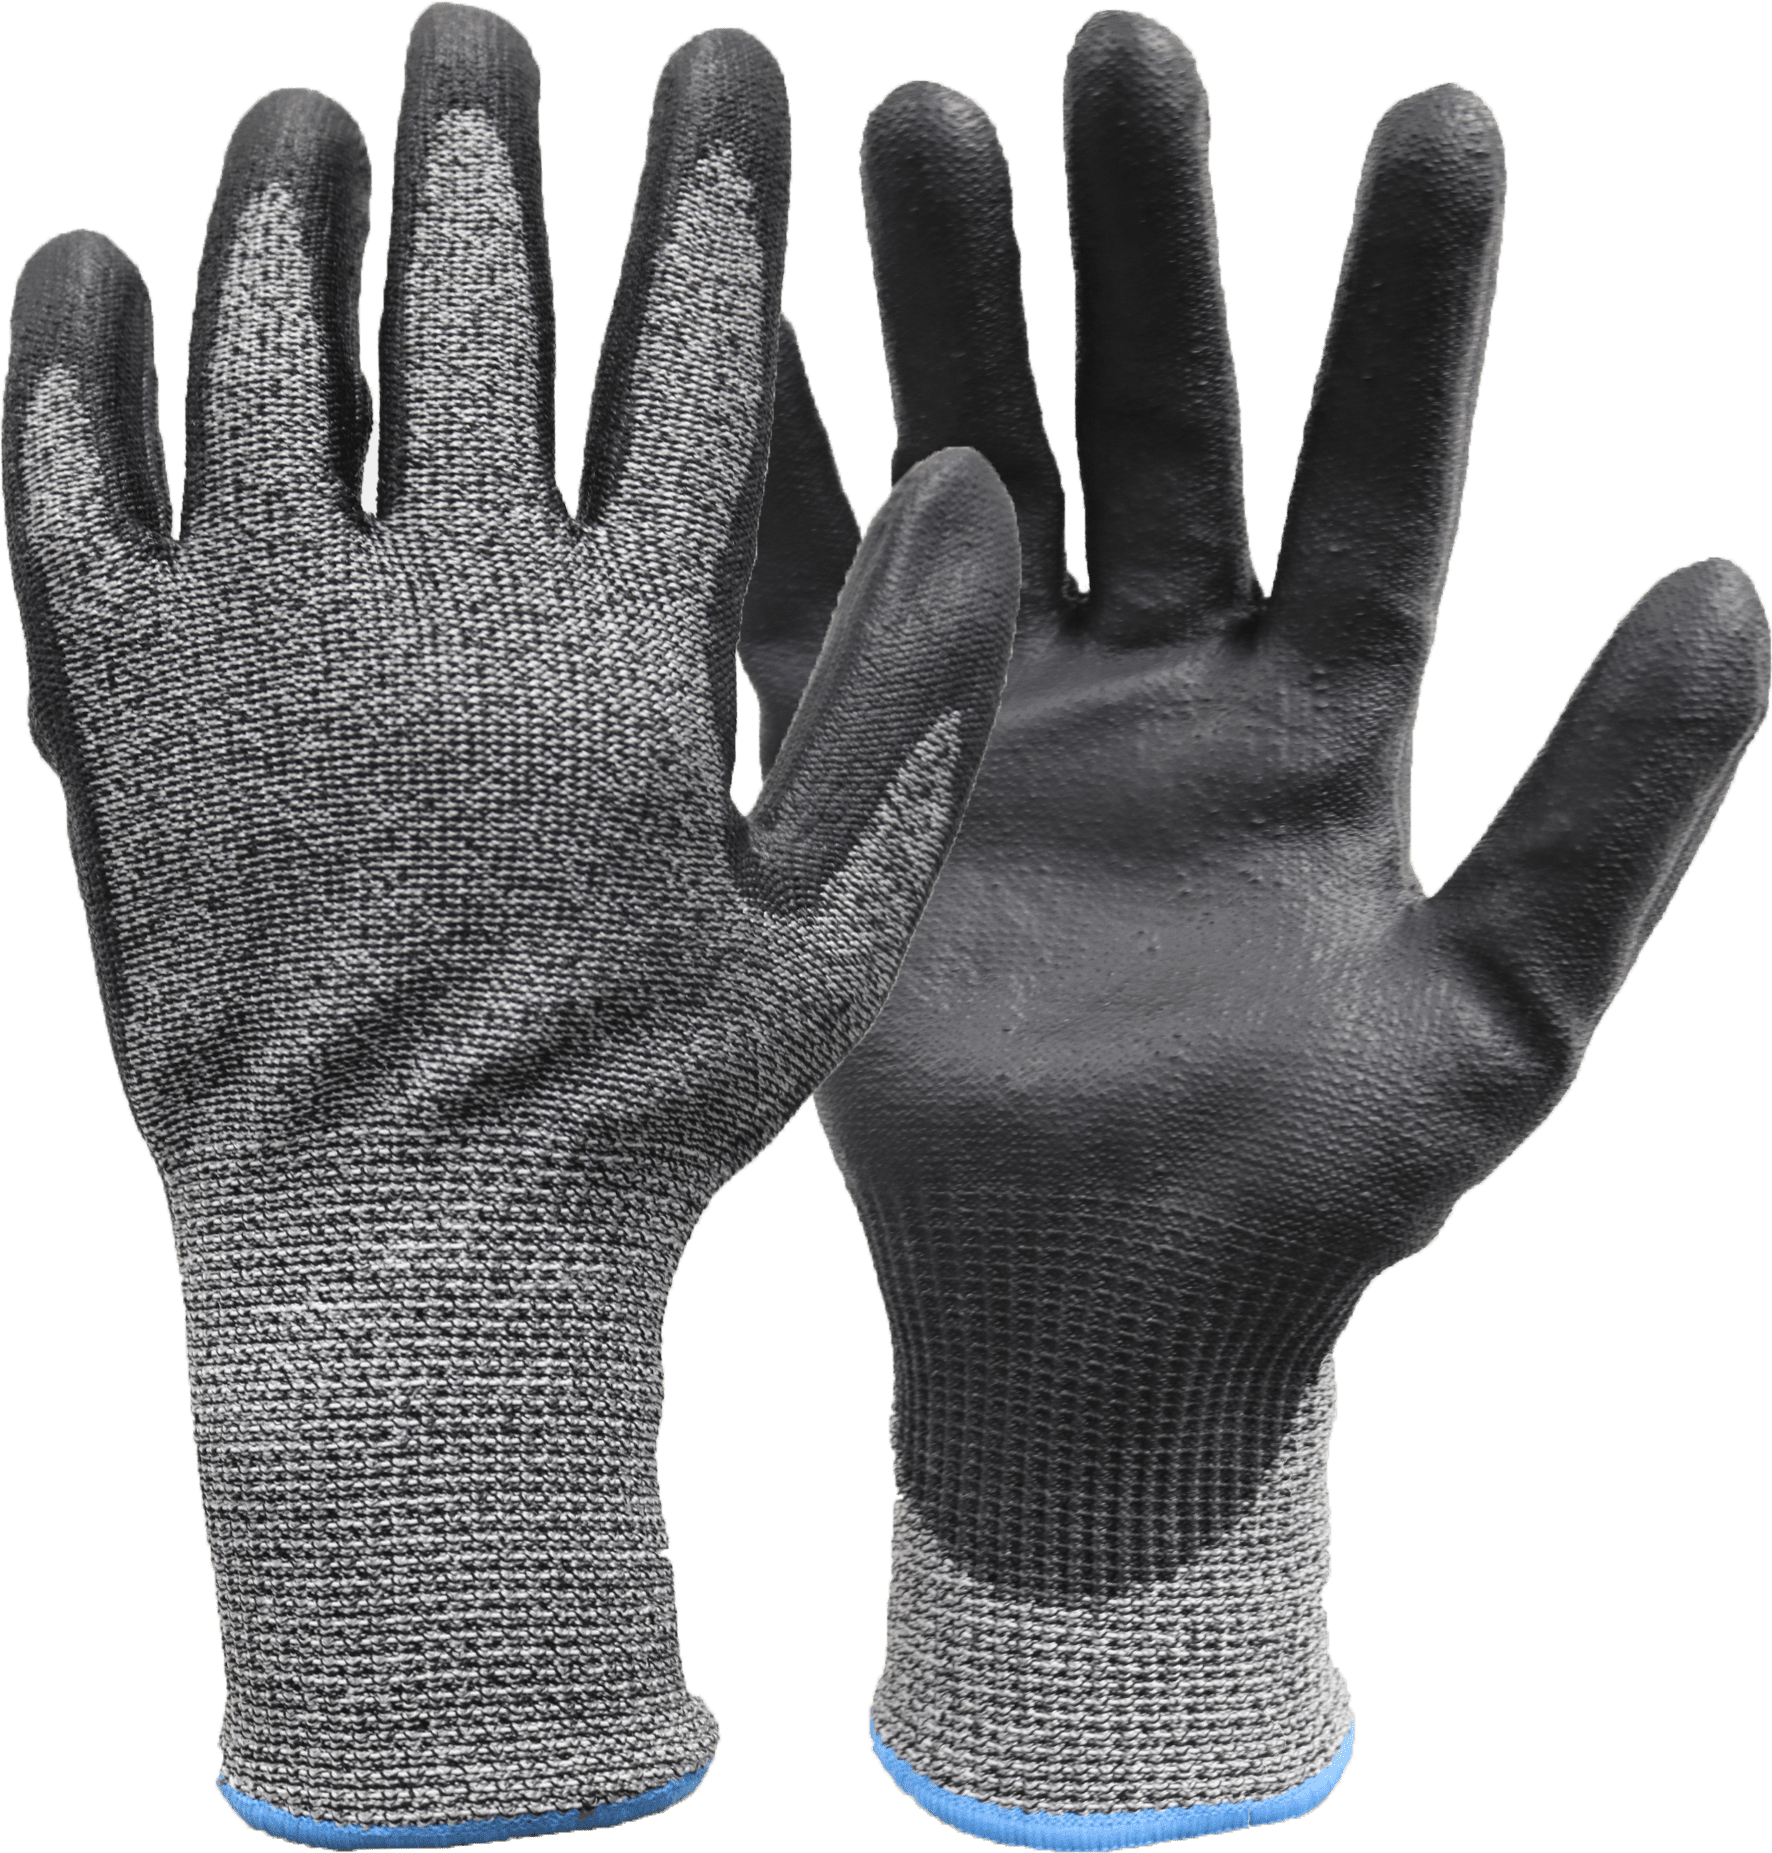 Steel Wire Safety Anti-cutting Butcher Gloves Gardening Work Hand Protection 